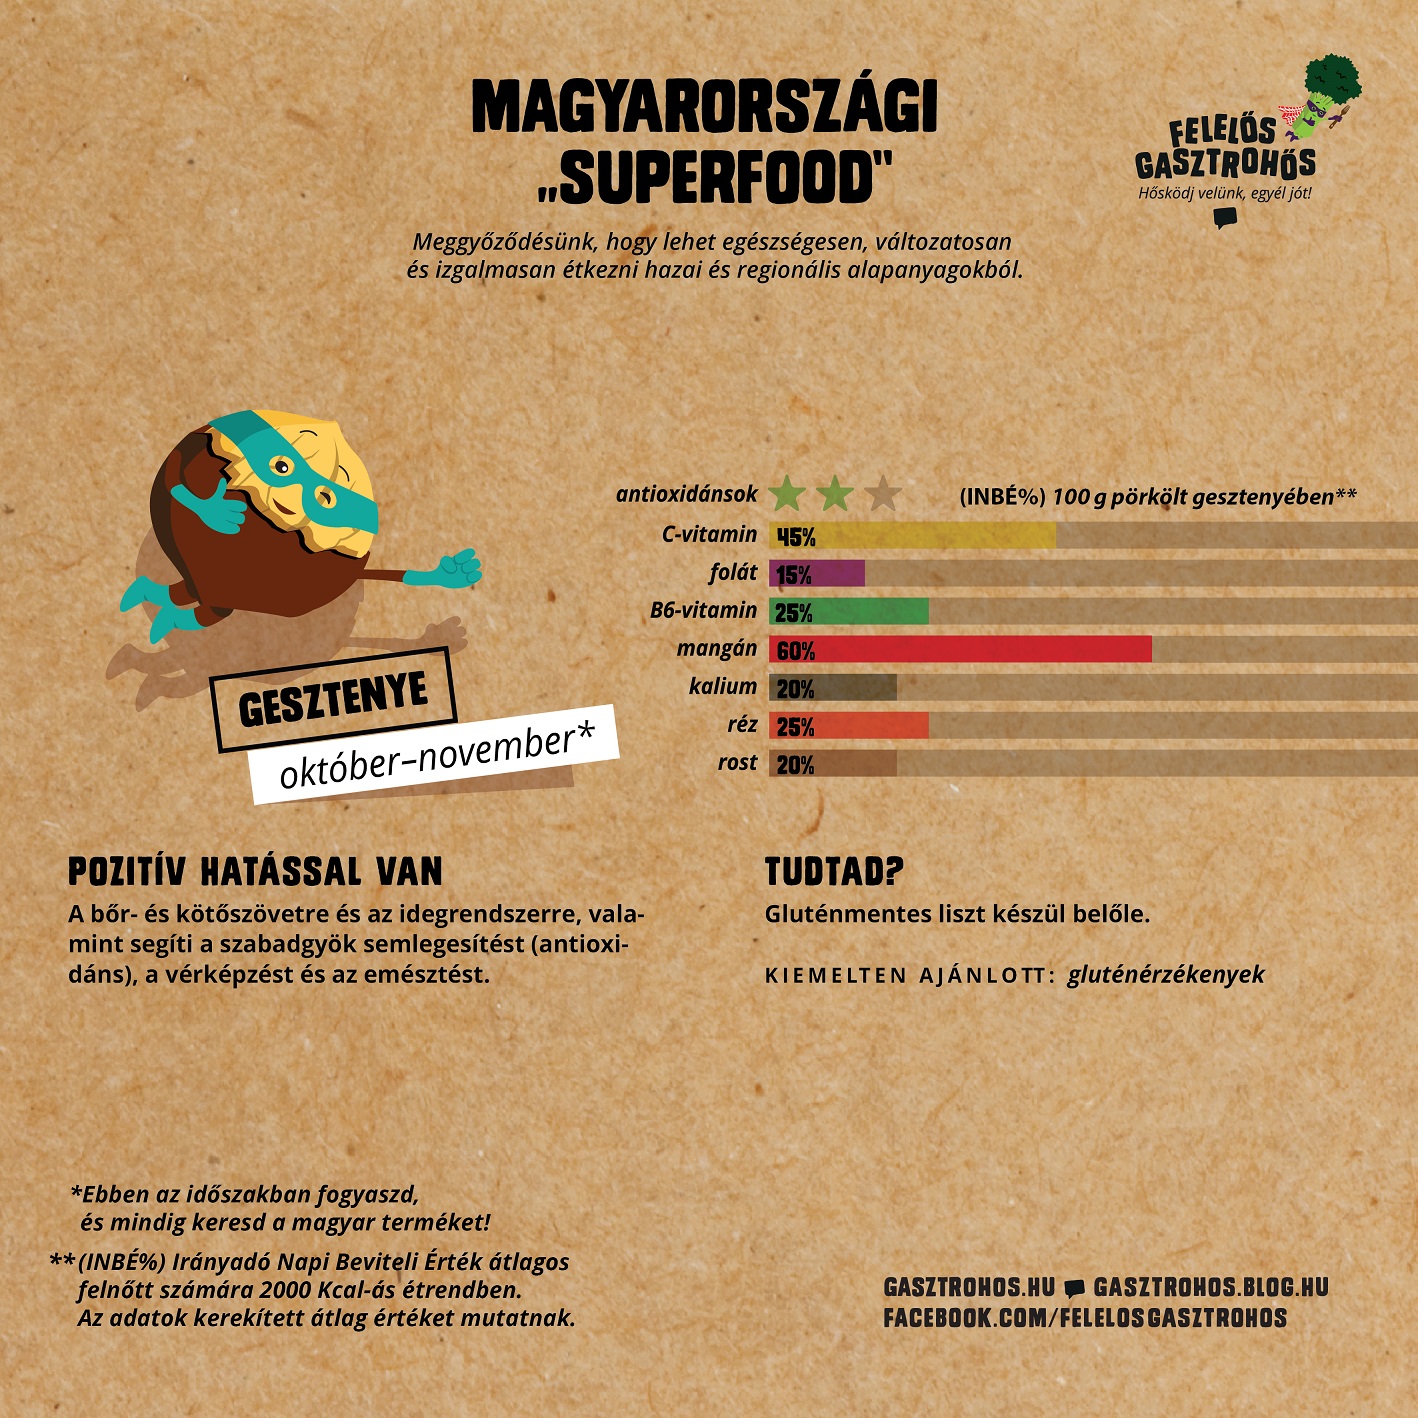 gasztrohos-superfood-terkep-infografika-2017-06-17-facebook-05.jpg